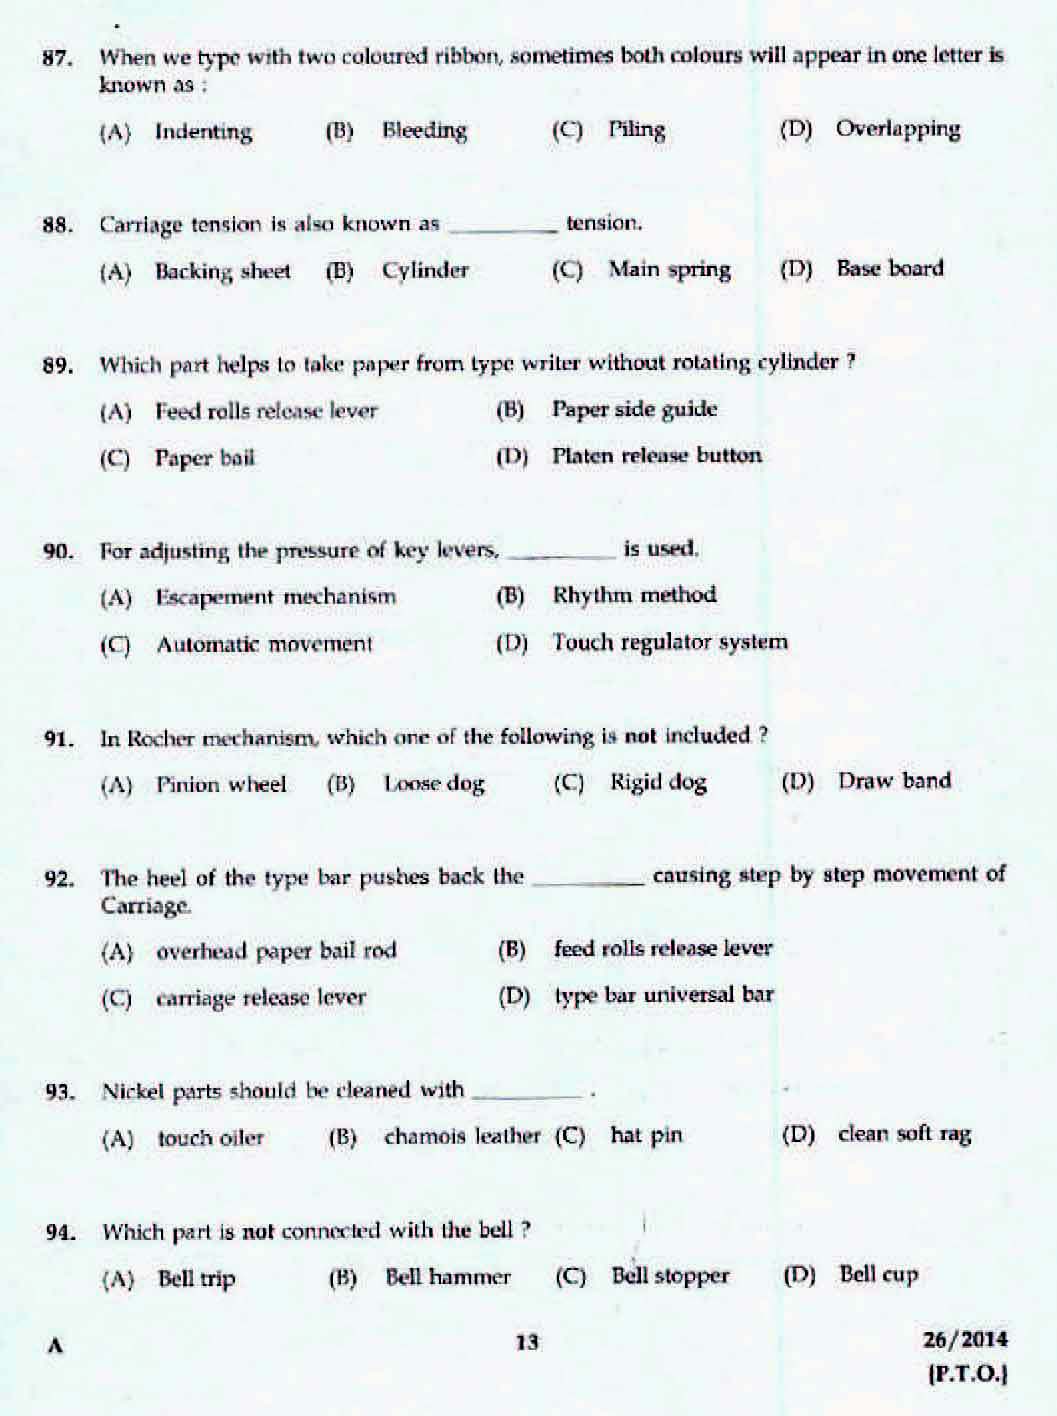 Kerala LD Typist Exam 2014 Question Paper Code 262014 11